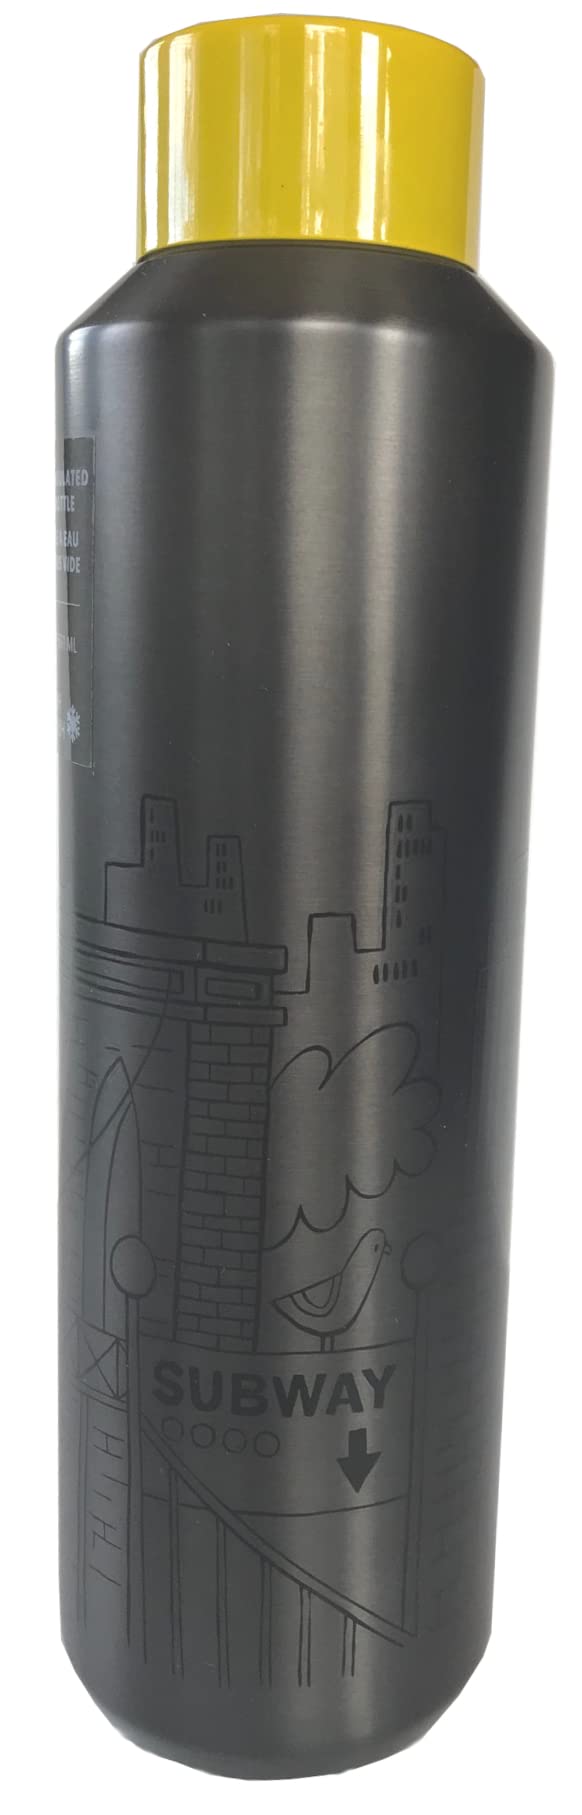 Starbucks New York City Water Bottle Vacuum Insulated Stainless Steel Tumbler, 20 Oz